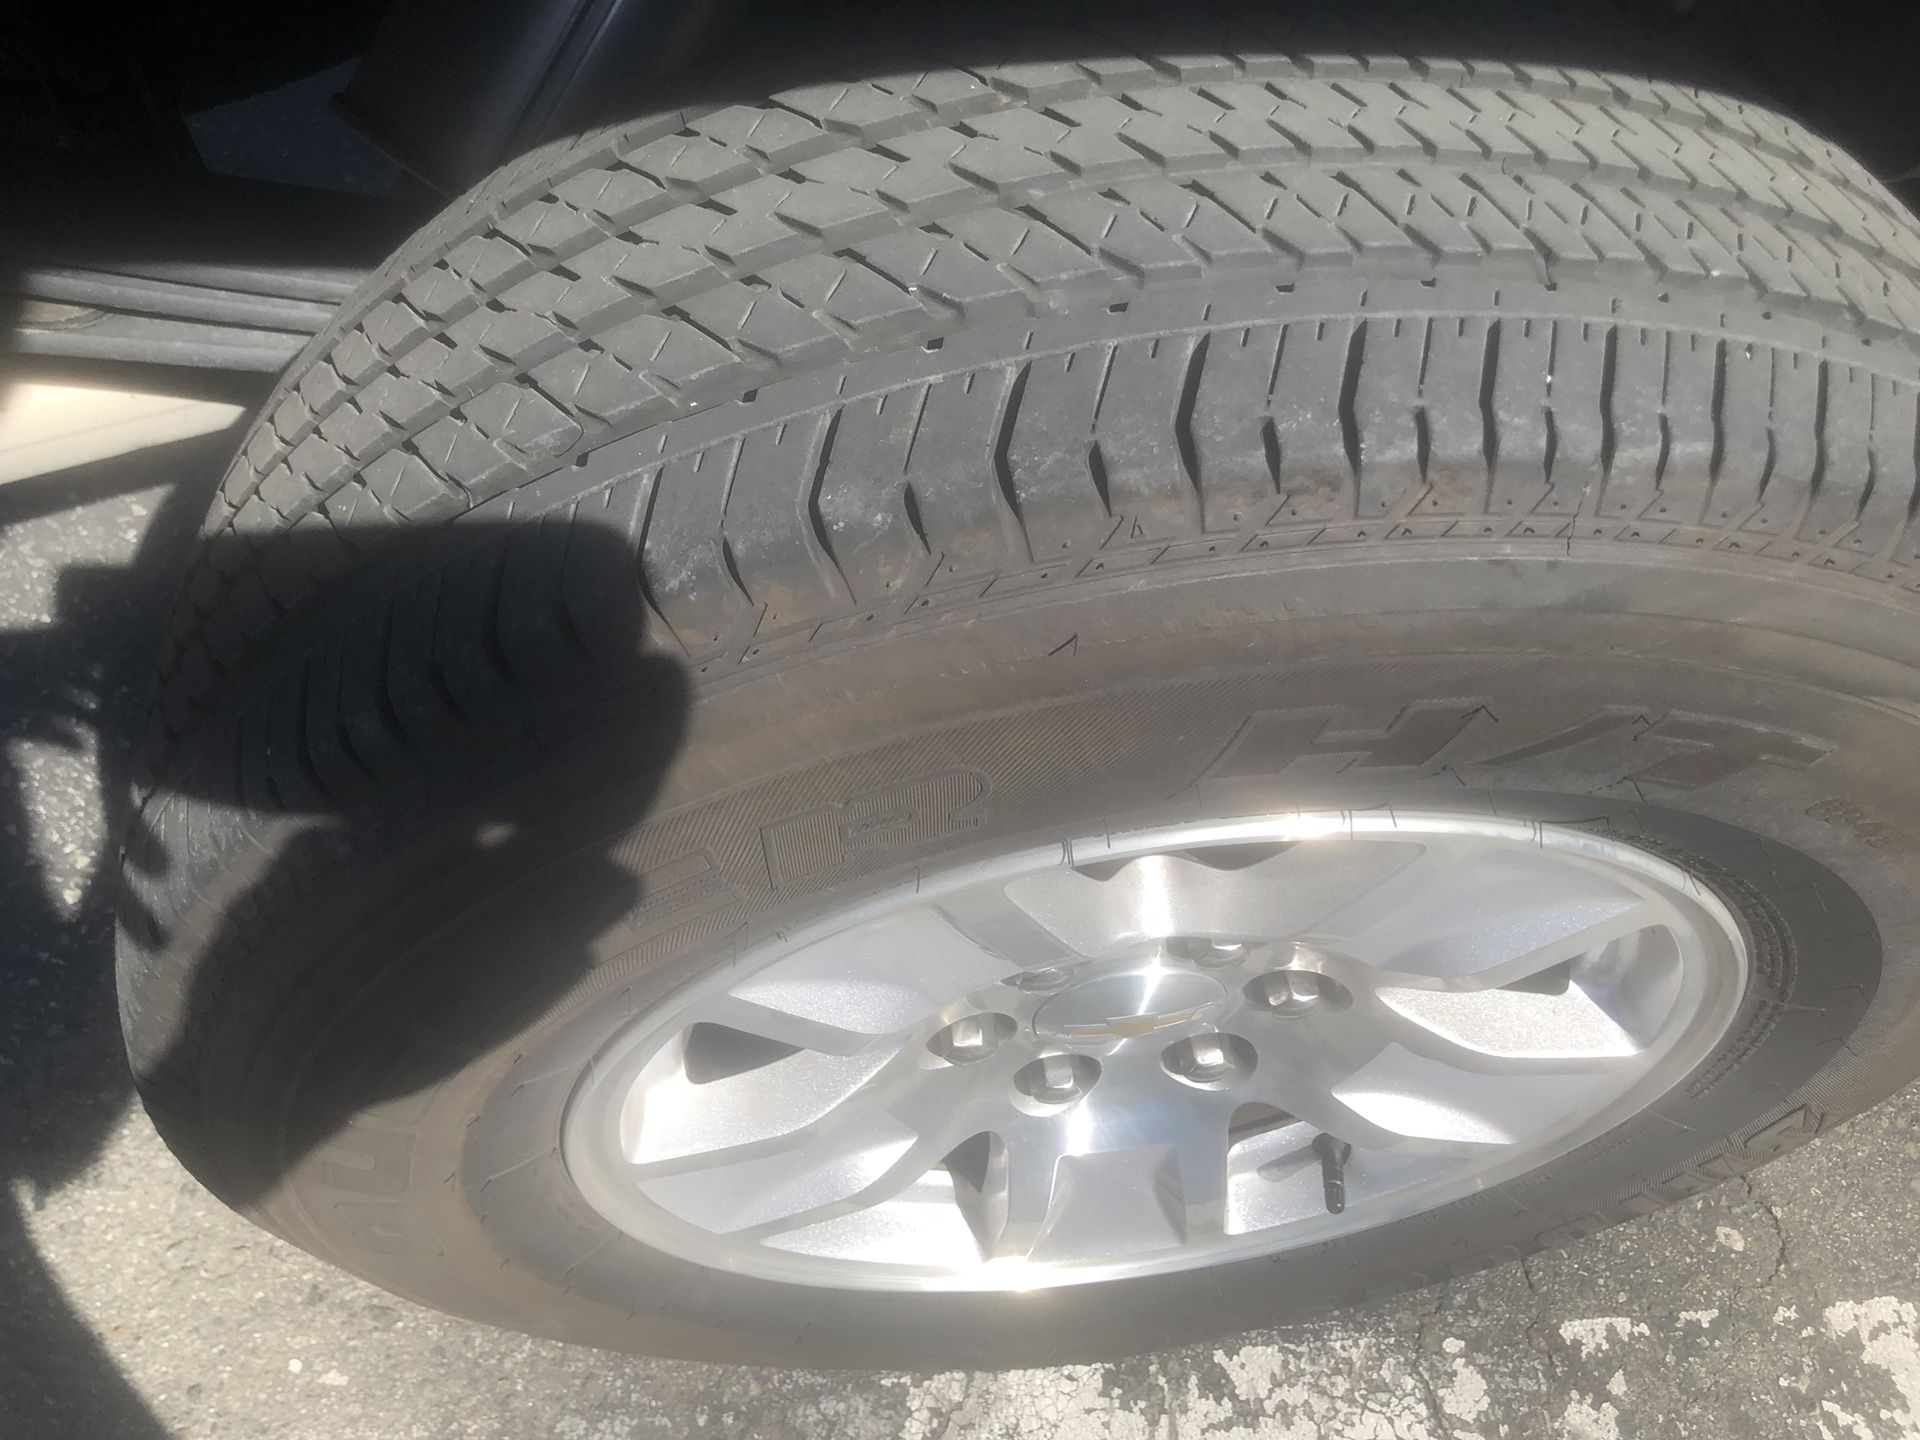 Chevy Silverado Oem rims and tires 17”